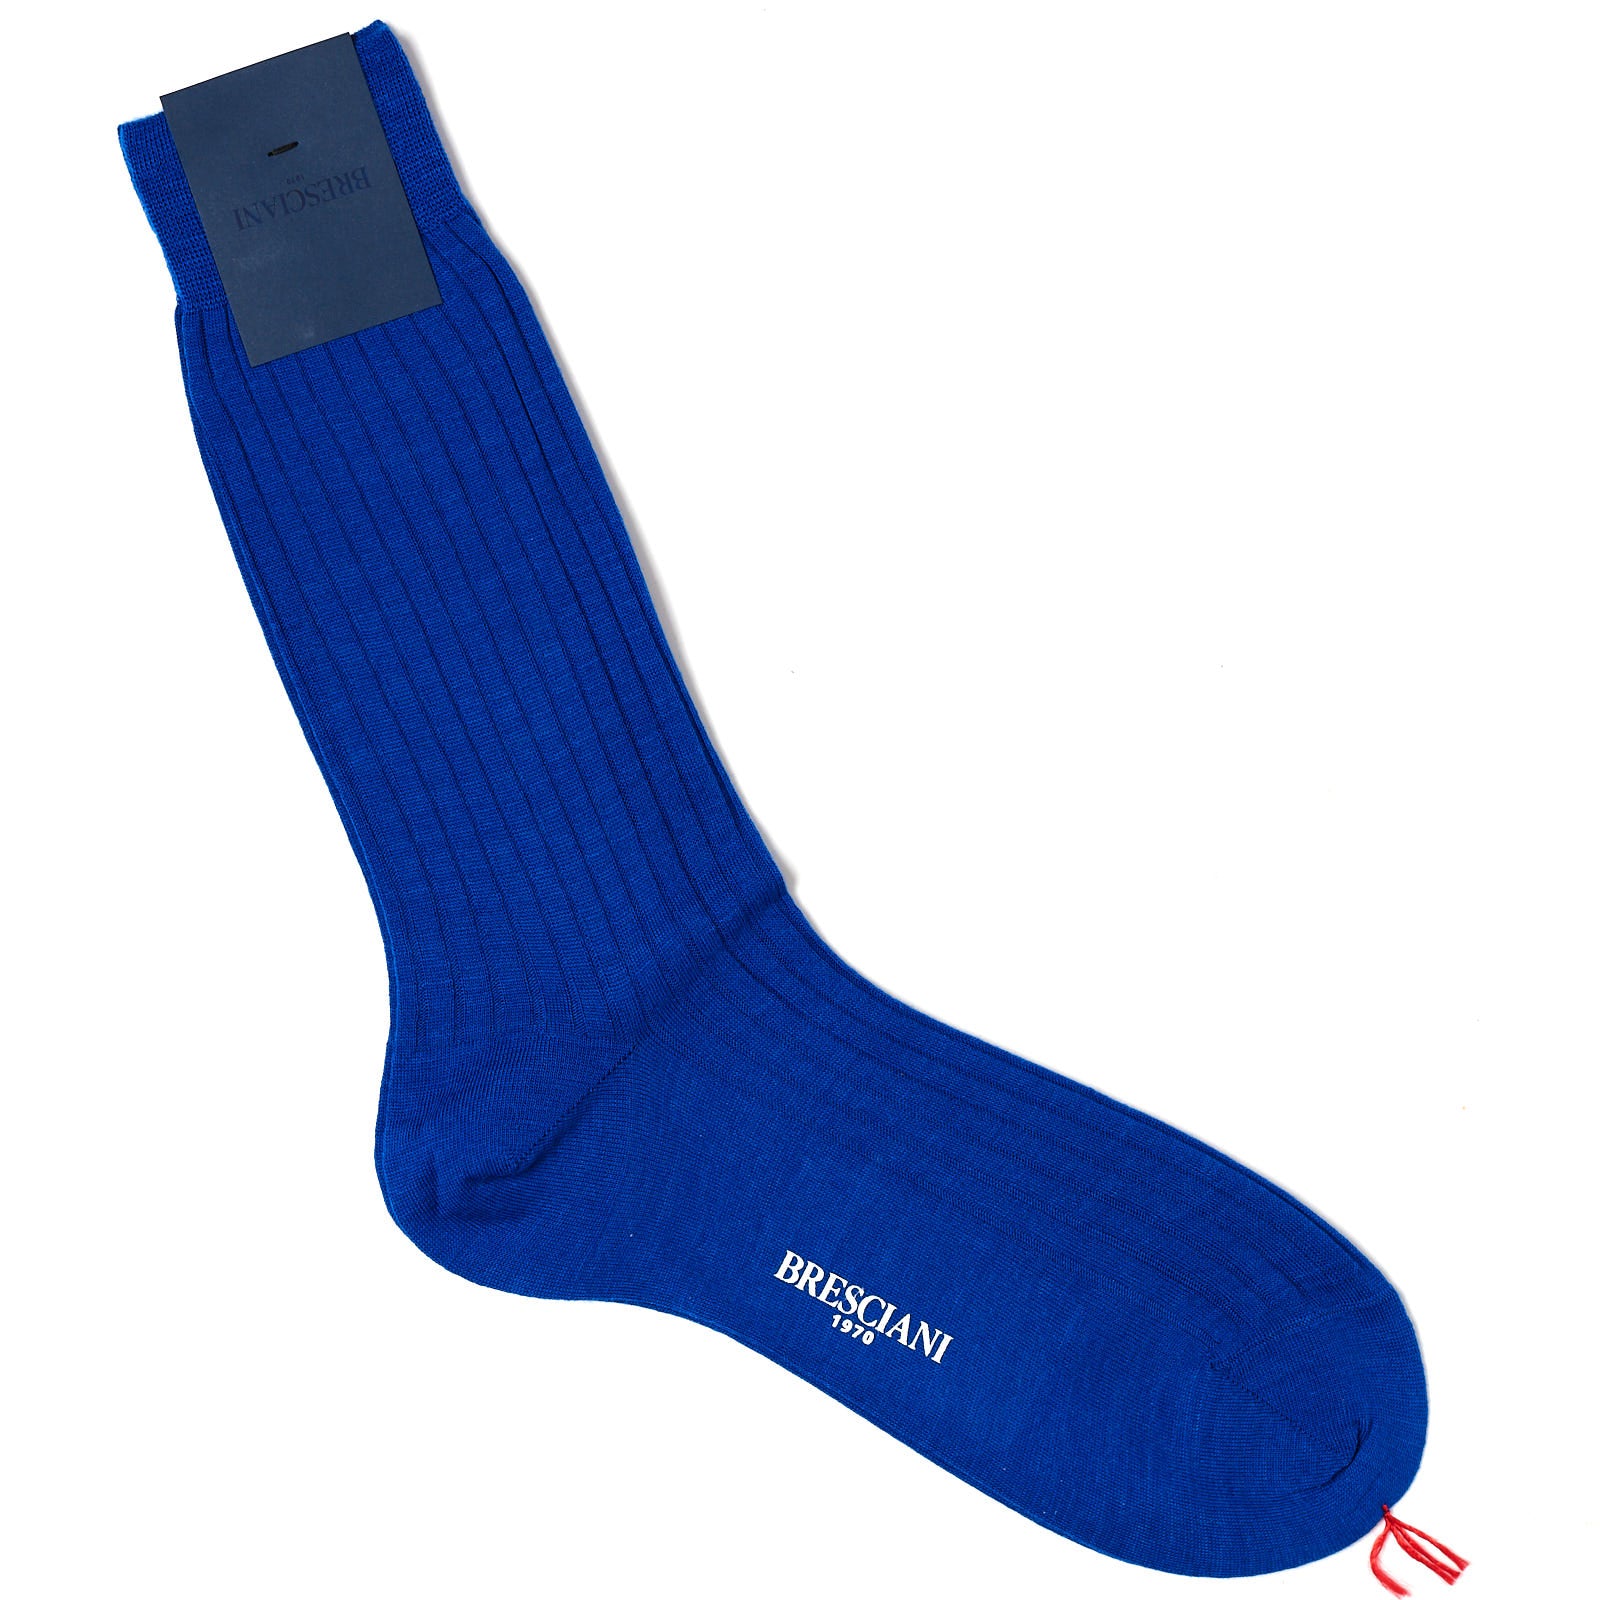 BRESCIANI Wool Blend Mid Calf Length Socks US M-L BRESCIANI